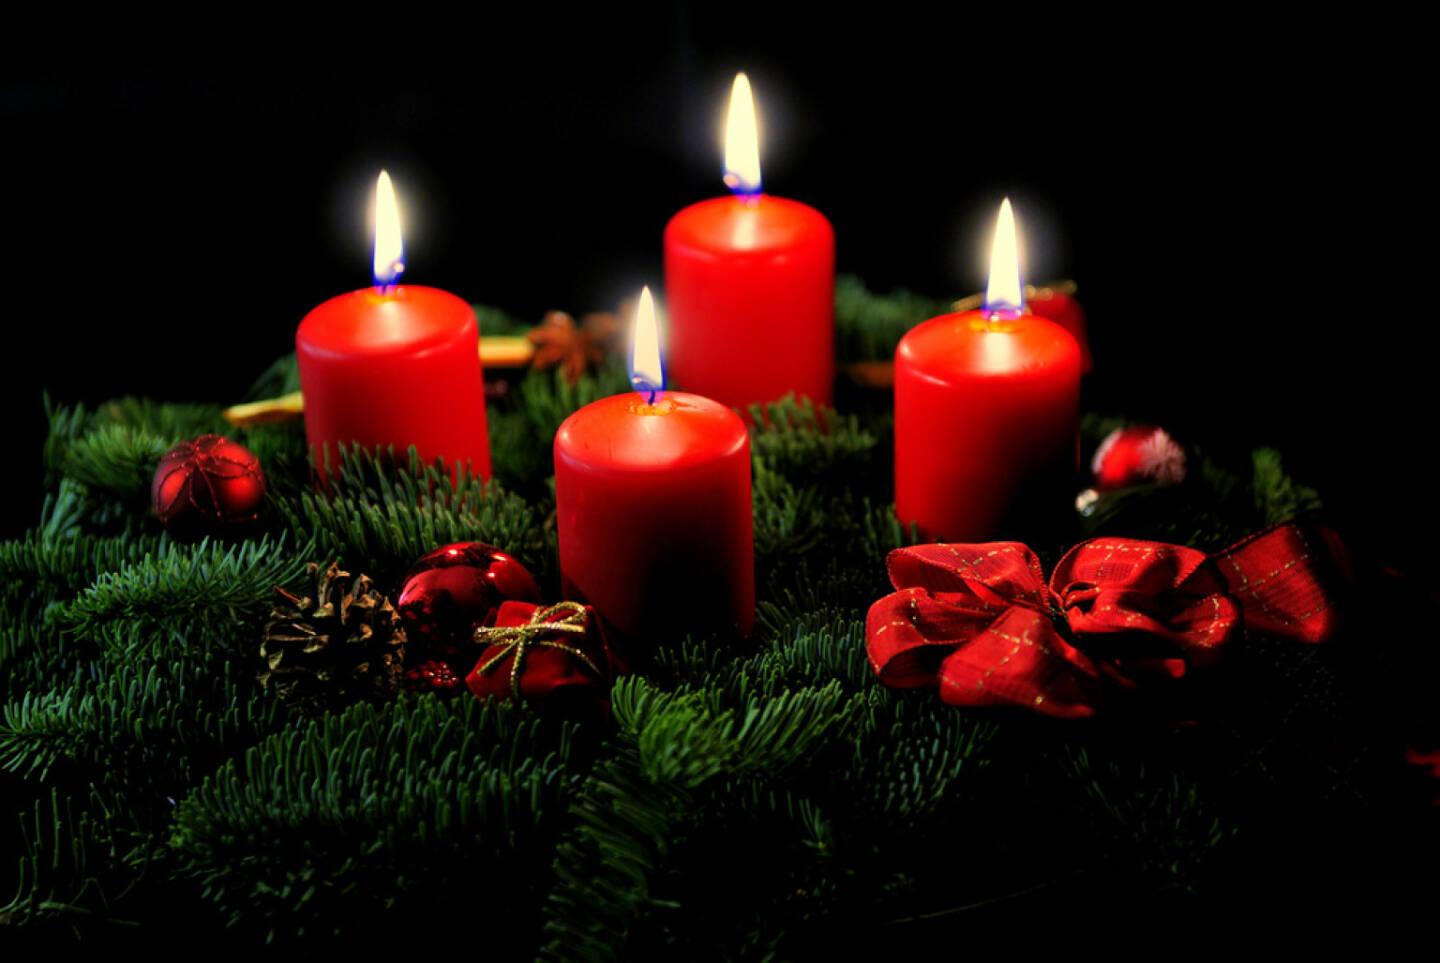 Weihnachten, Europa, Adventkranz, Kerzen, Licht, besinnlich, http://www.shutterstock.com/de/pic-105372086/stock-photo-advent-wreath-with-candle-and-decorations.html?